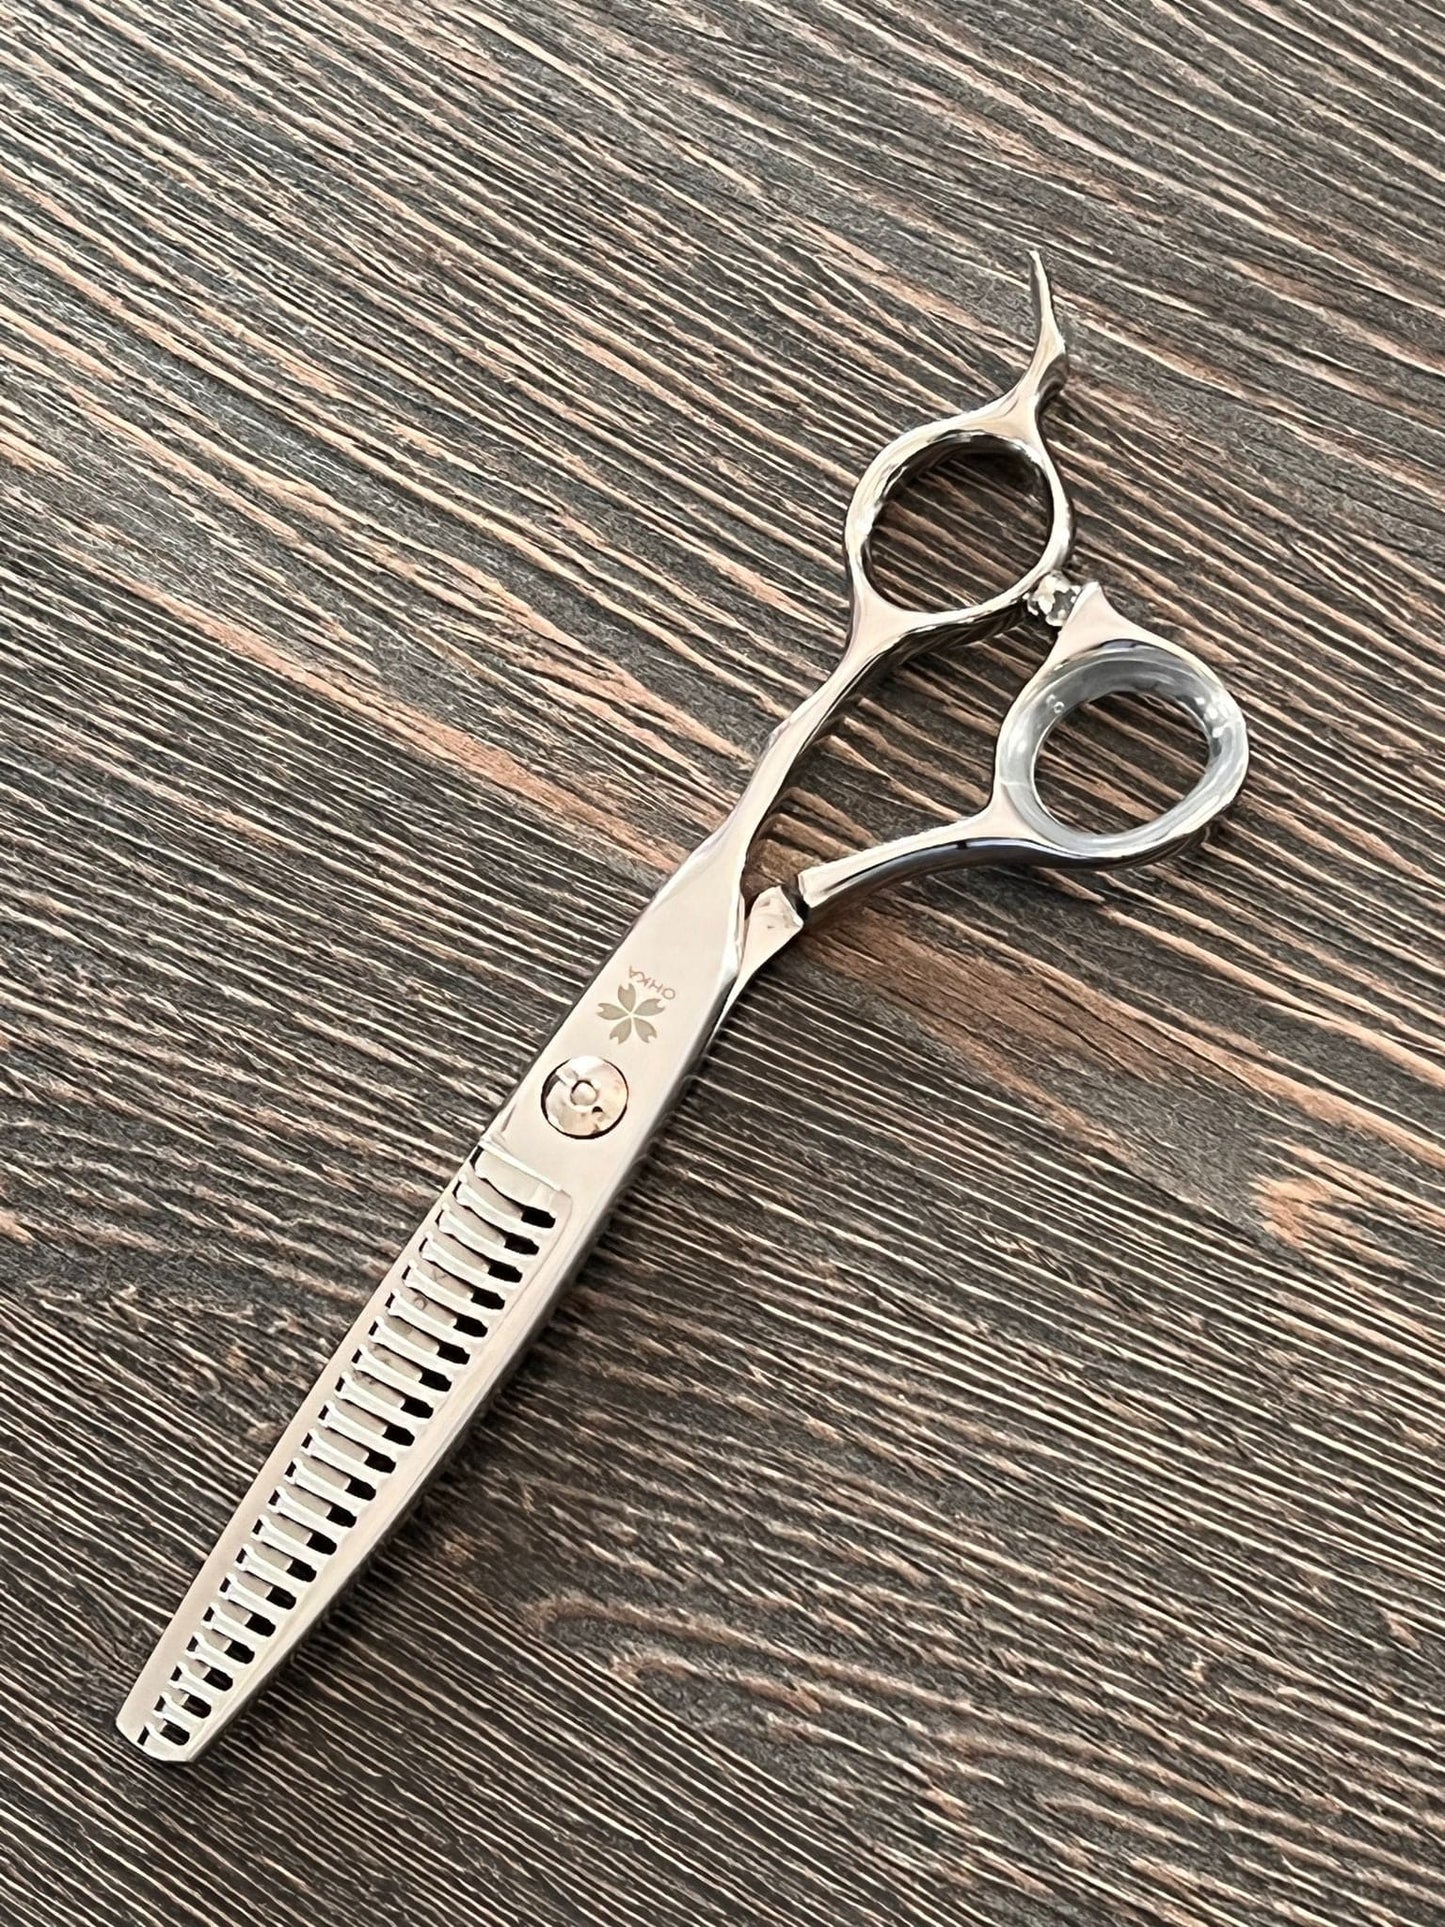 Sakura Hairdressing Scissors OHKA 003  6 inch 35 teeth  reversible